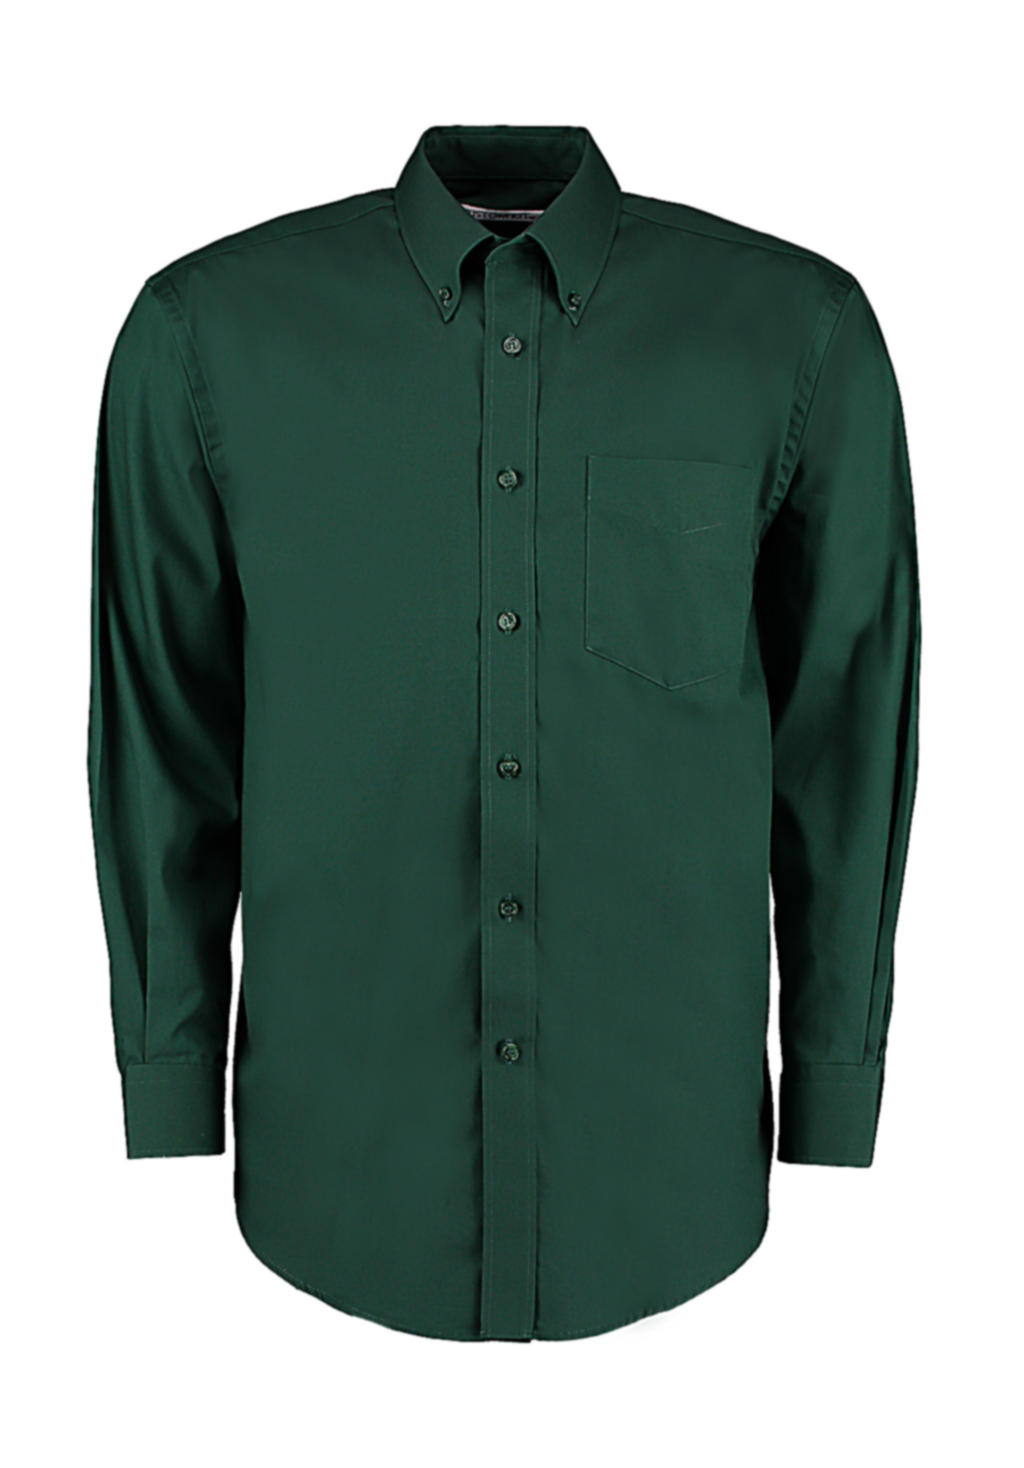 778.11 / Classic Fit Premium Oxford Shirt / Bottle Green